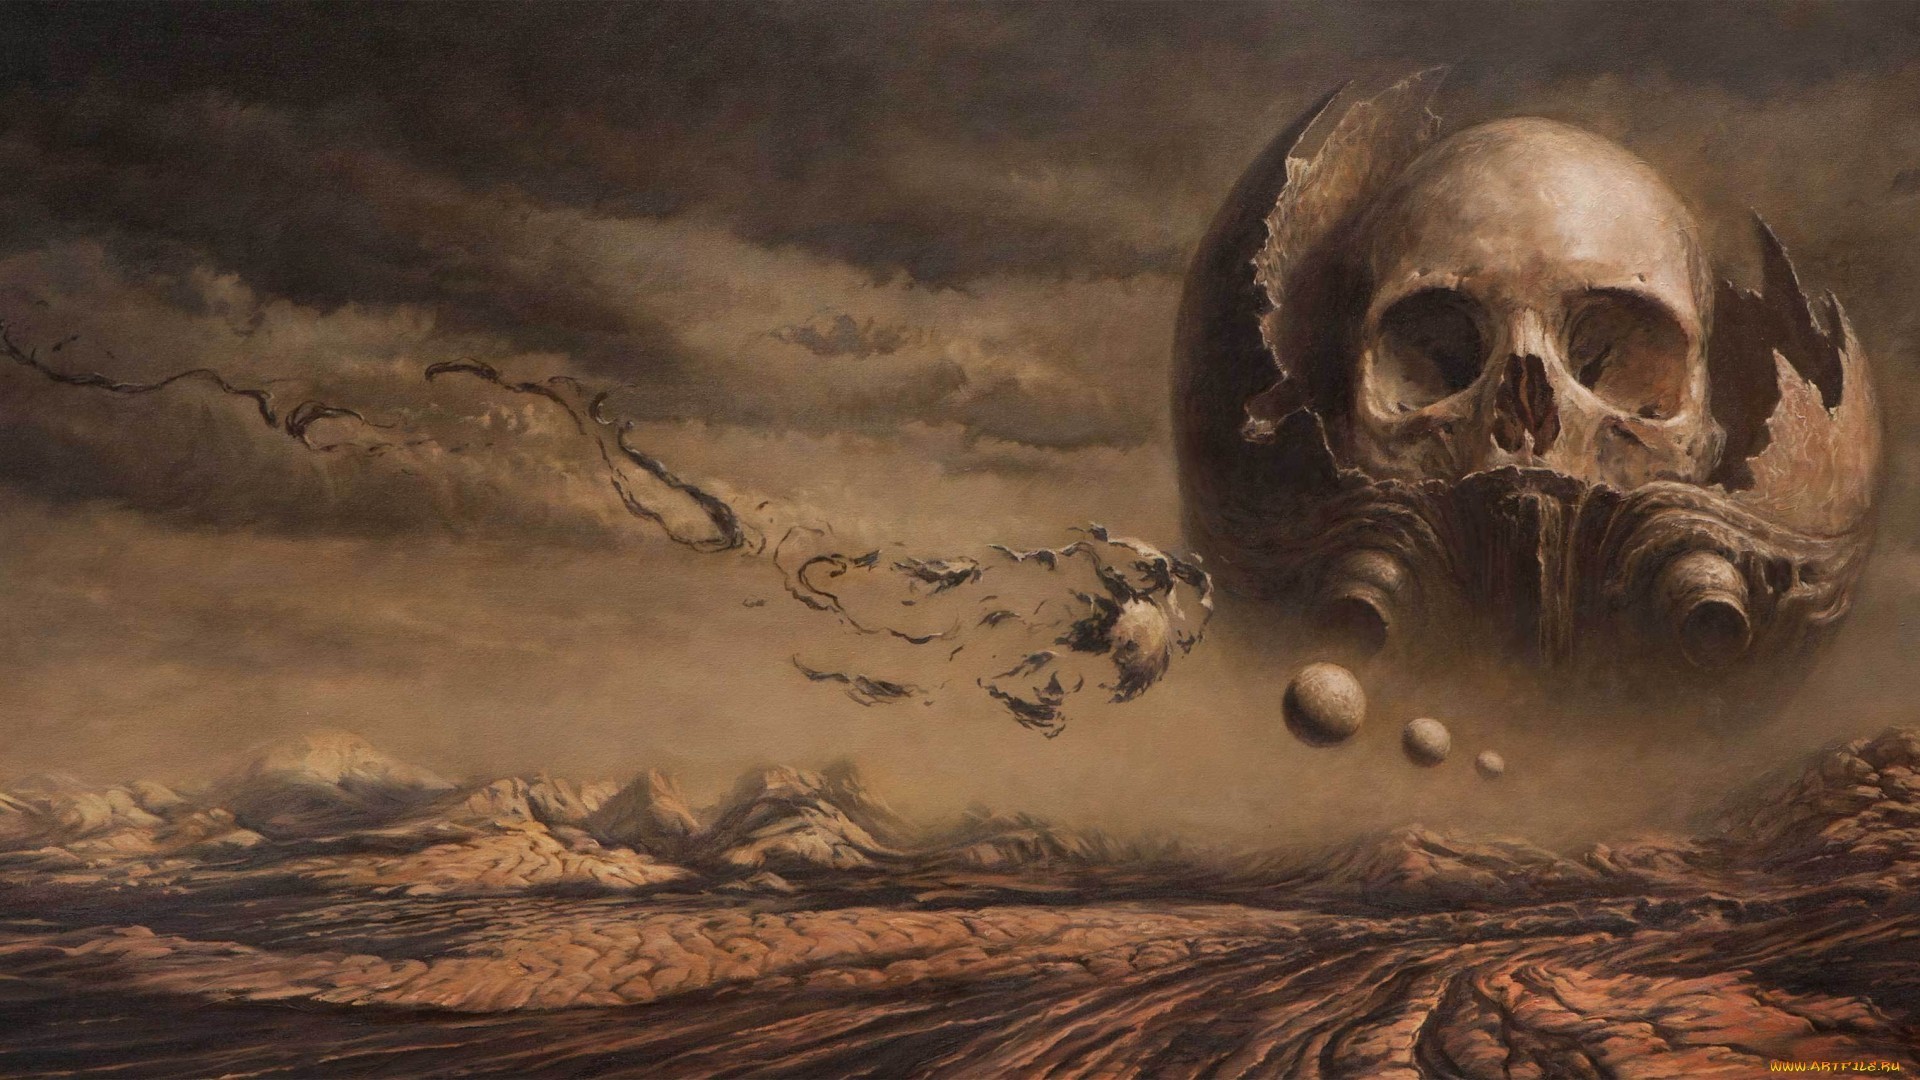 General 1920x1080 fantasy art artwork landscape skull sky mountains Beastwars (band)